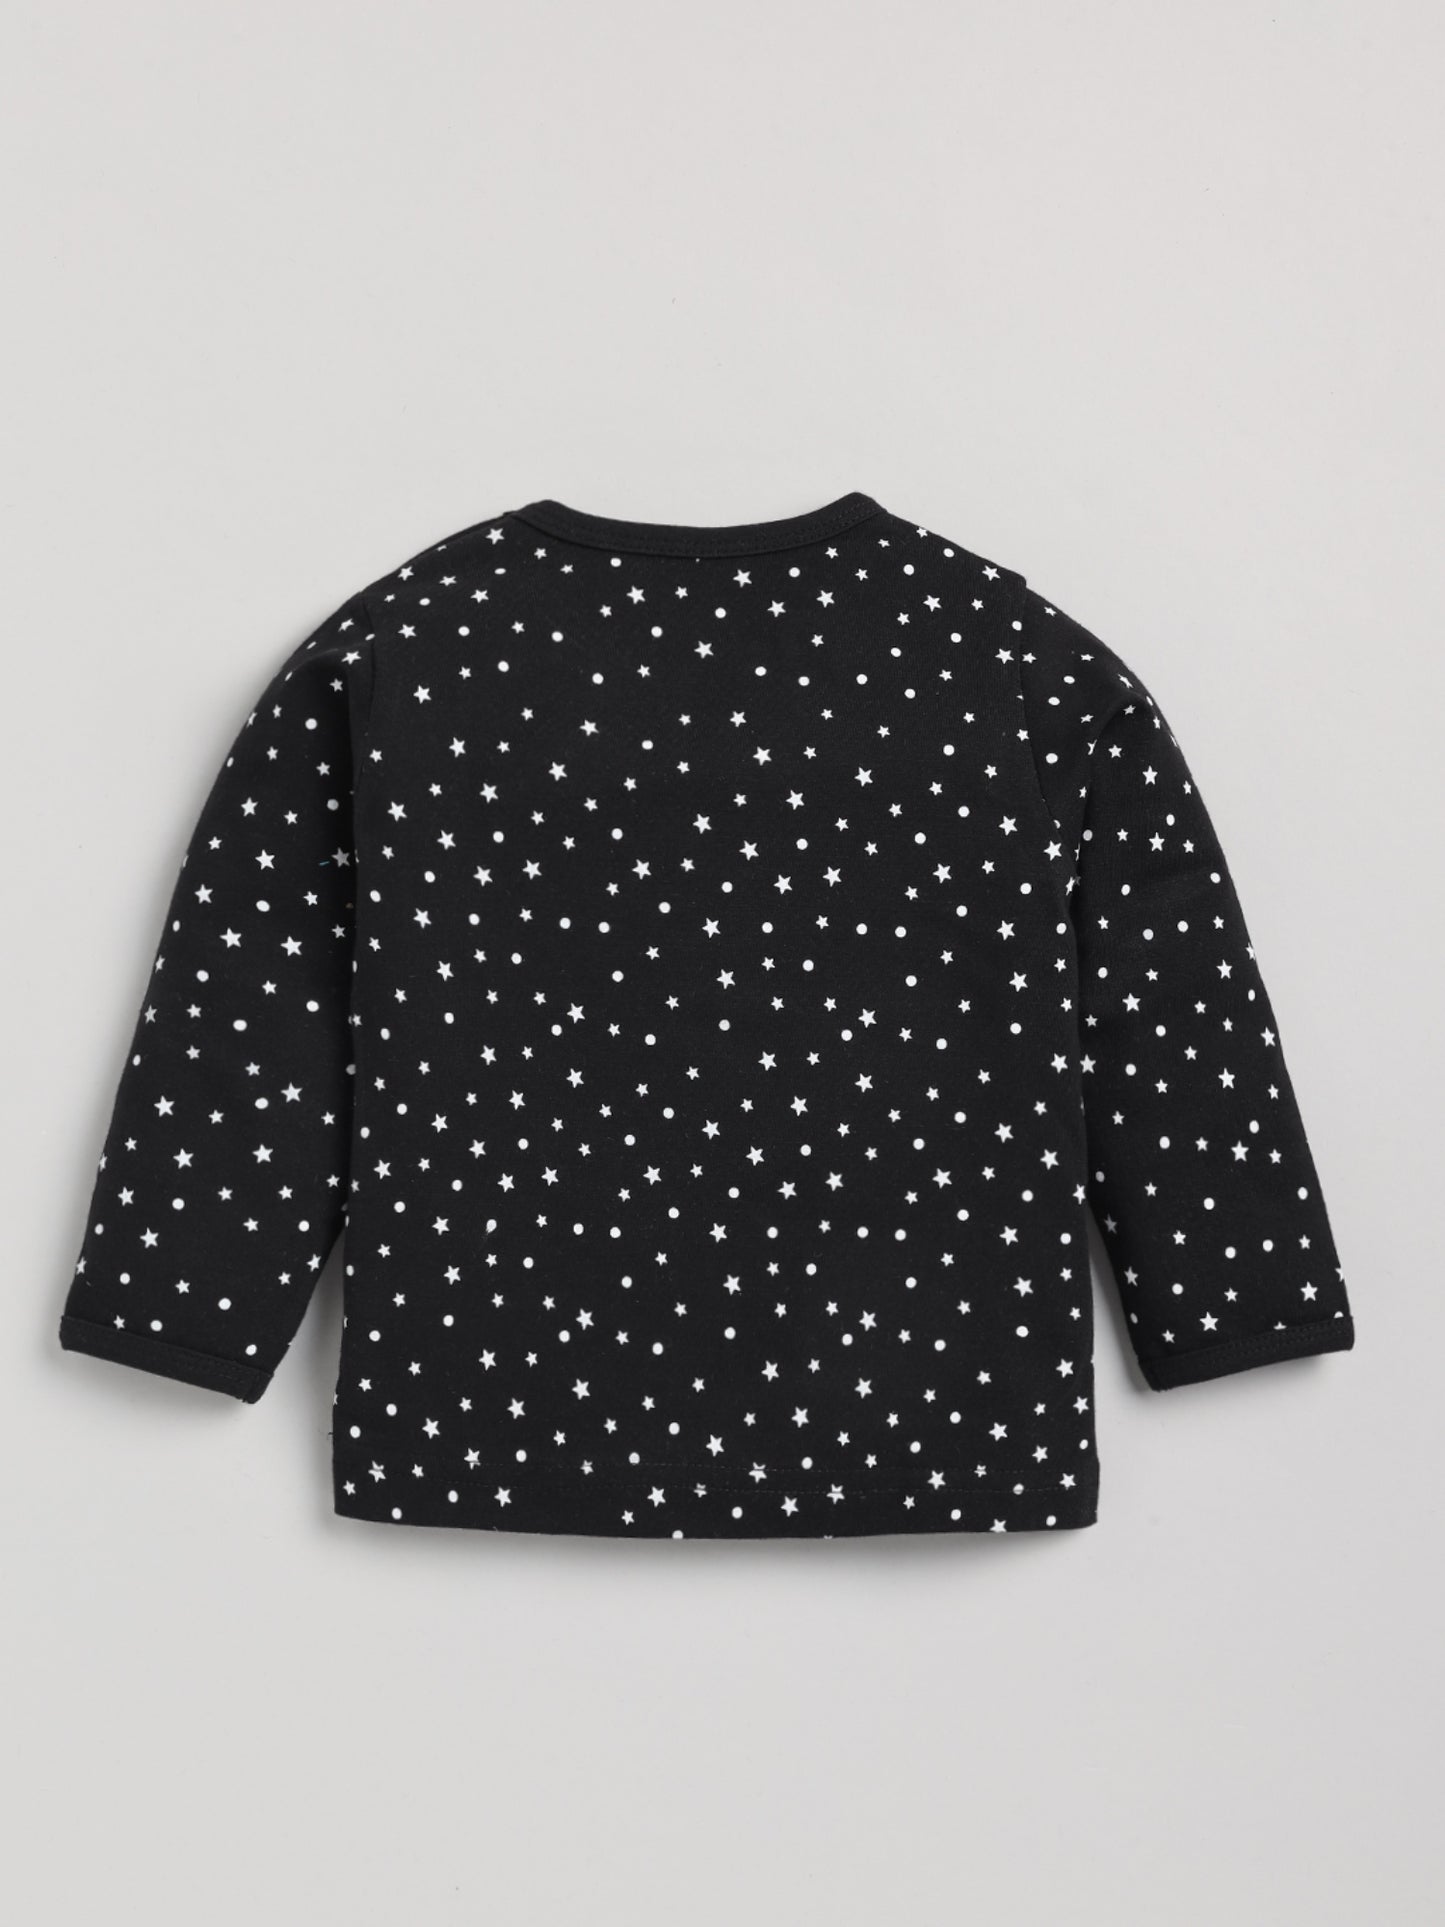 Universe Theme Black Full Sleeve Cotton Daywear/Nightwear Set